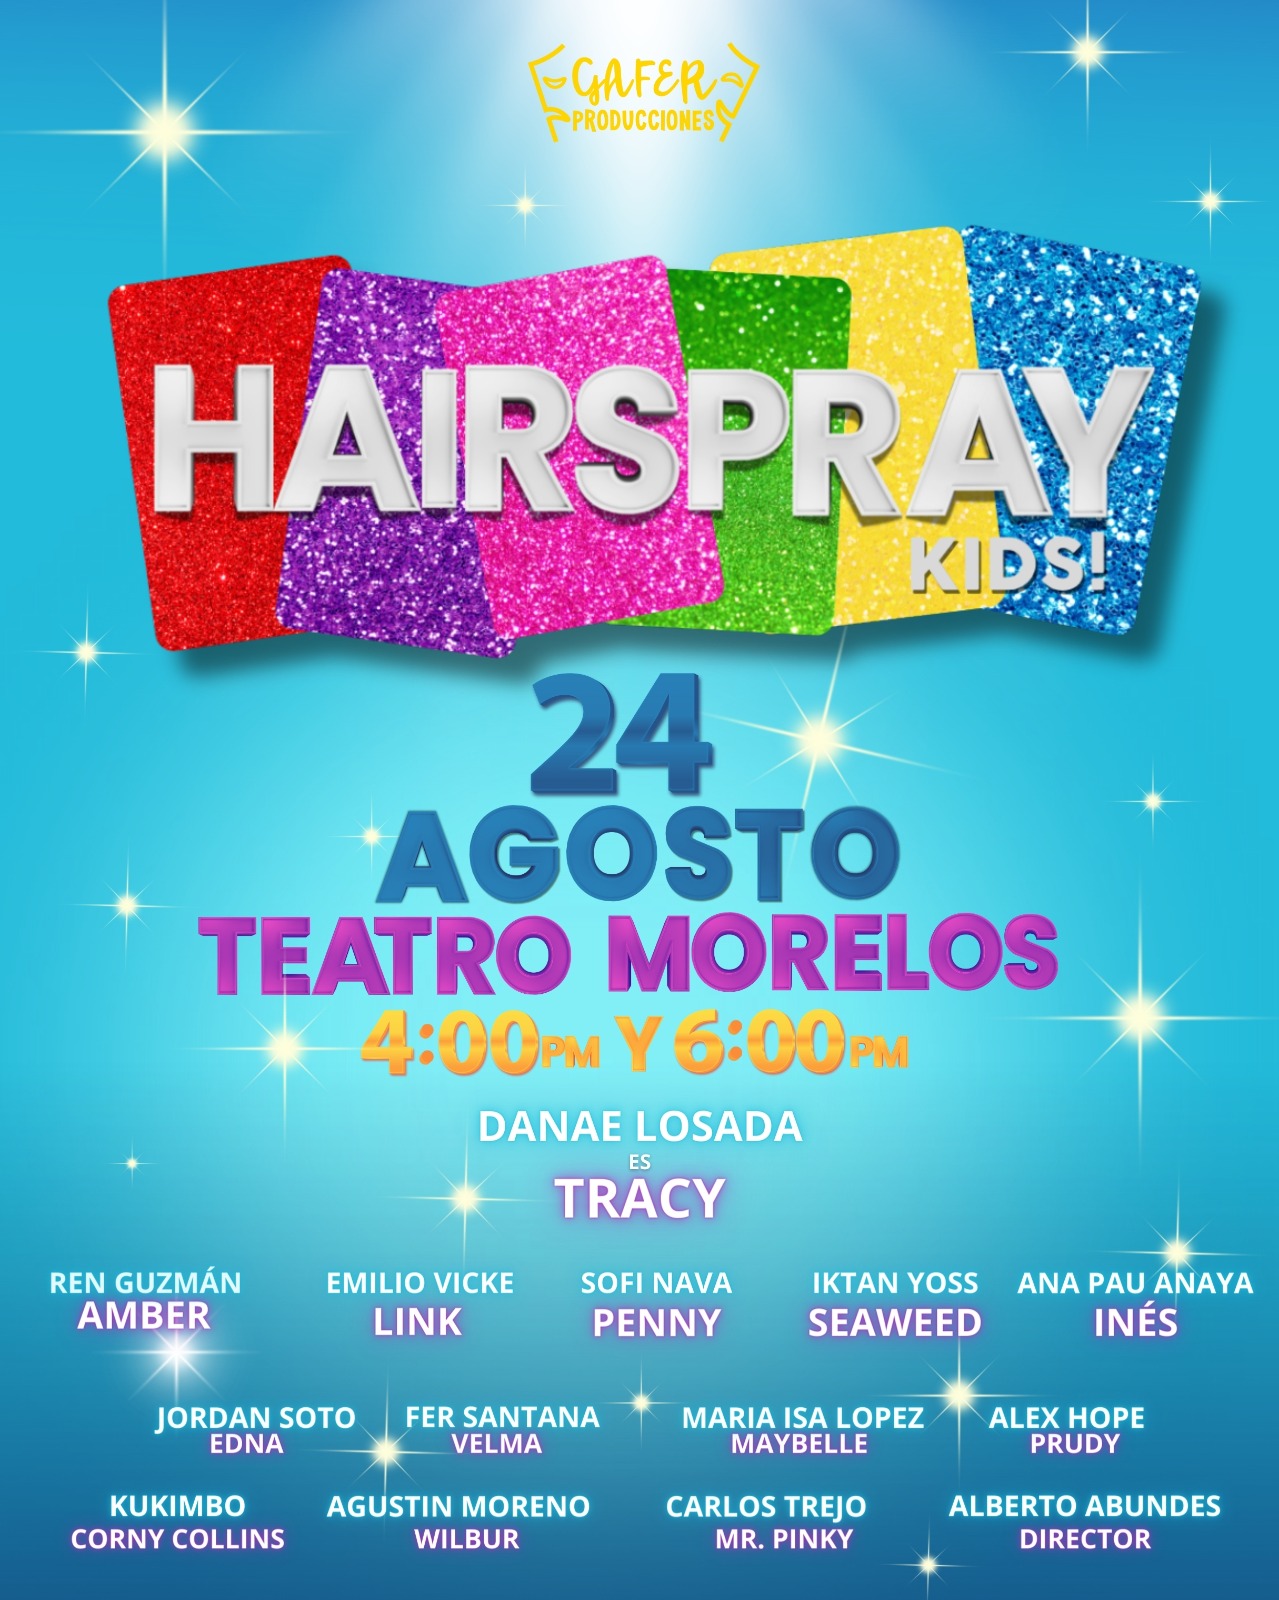 Hairspray kids!